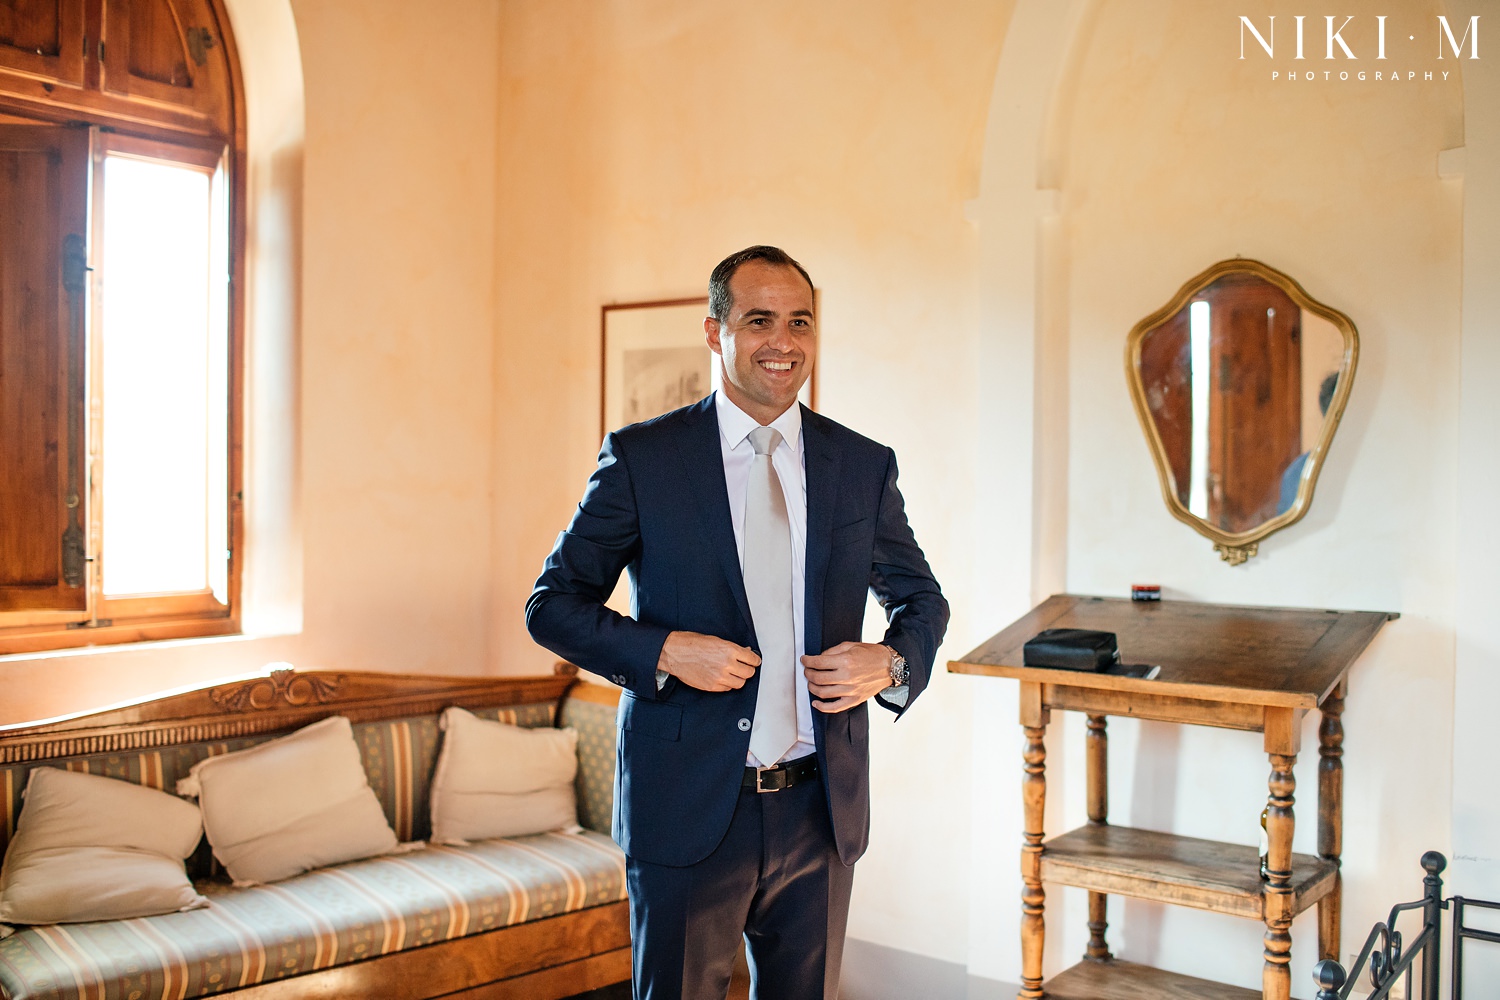 A groom gets ready before the big day at his Tuscany wedding venue, Villa Ricrio